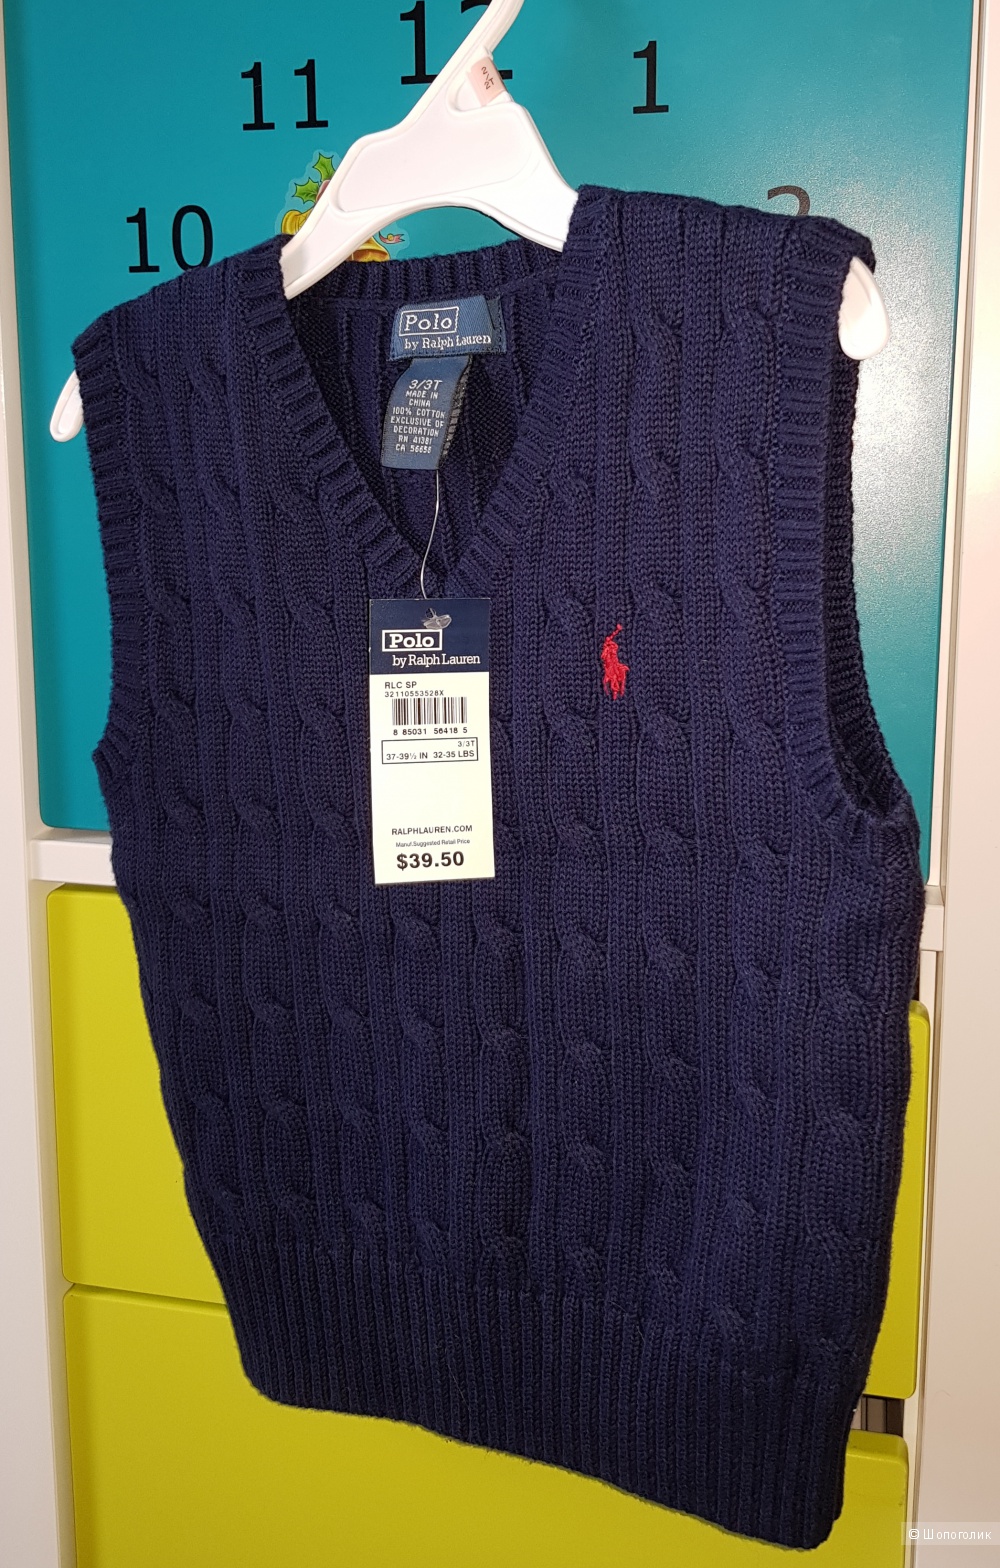 Жилетка Ralph Lauren Knit Sweater Vest 3 года